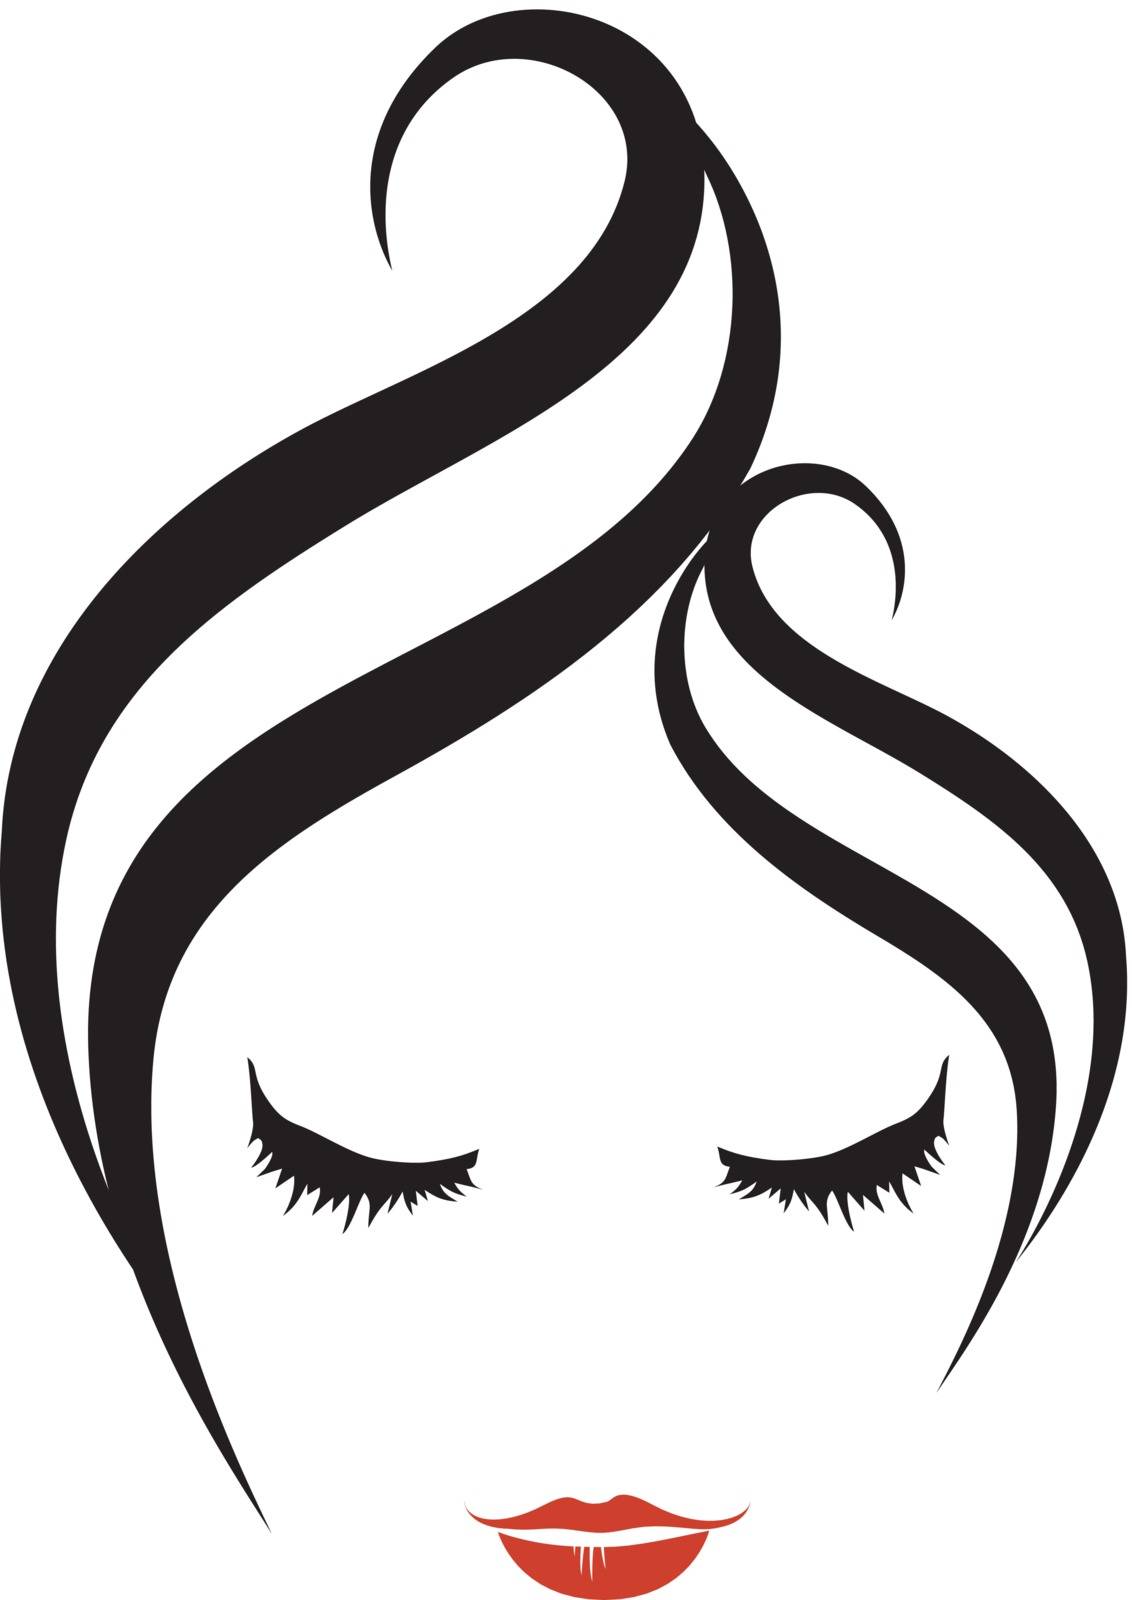 Hairstyle logo